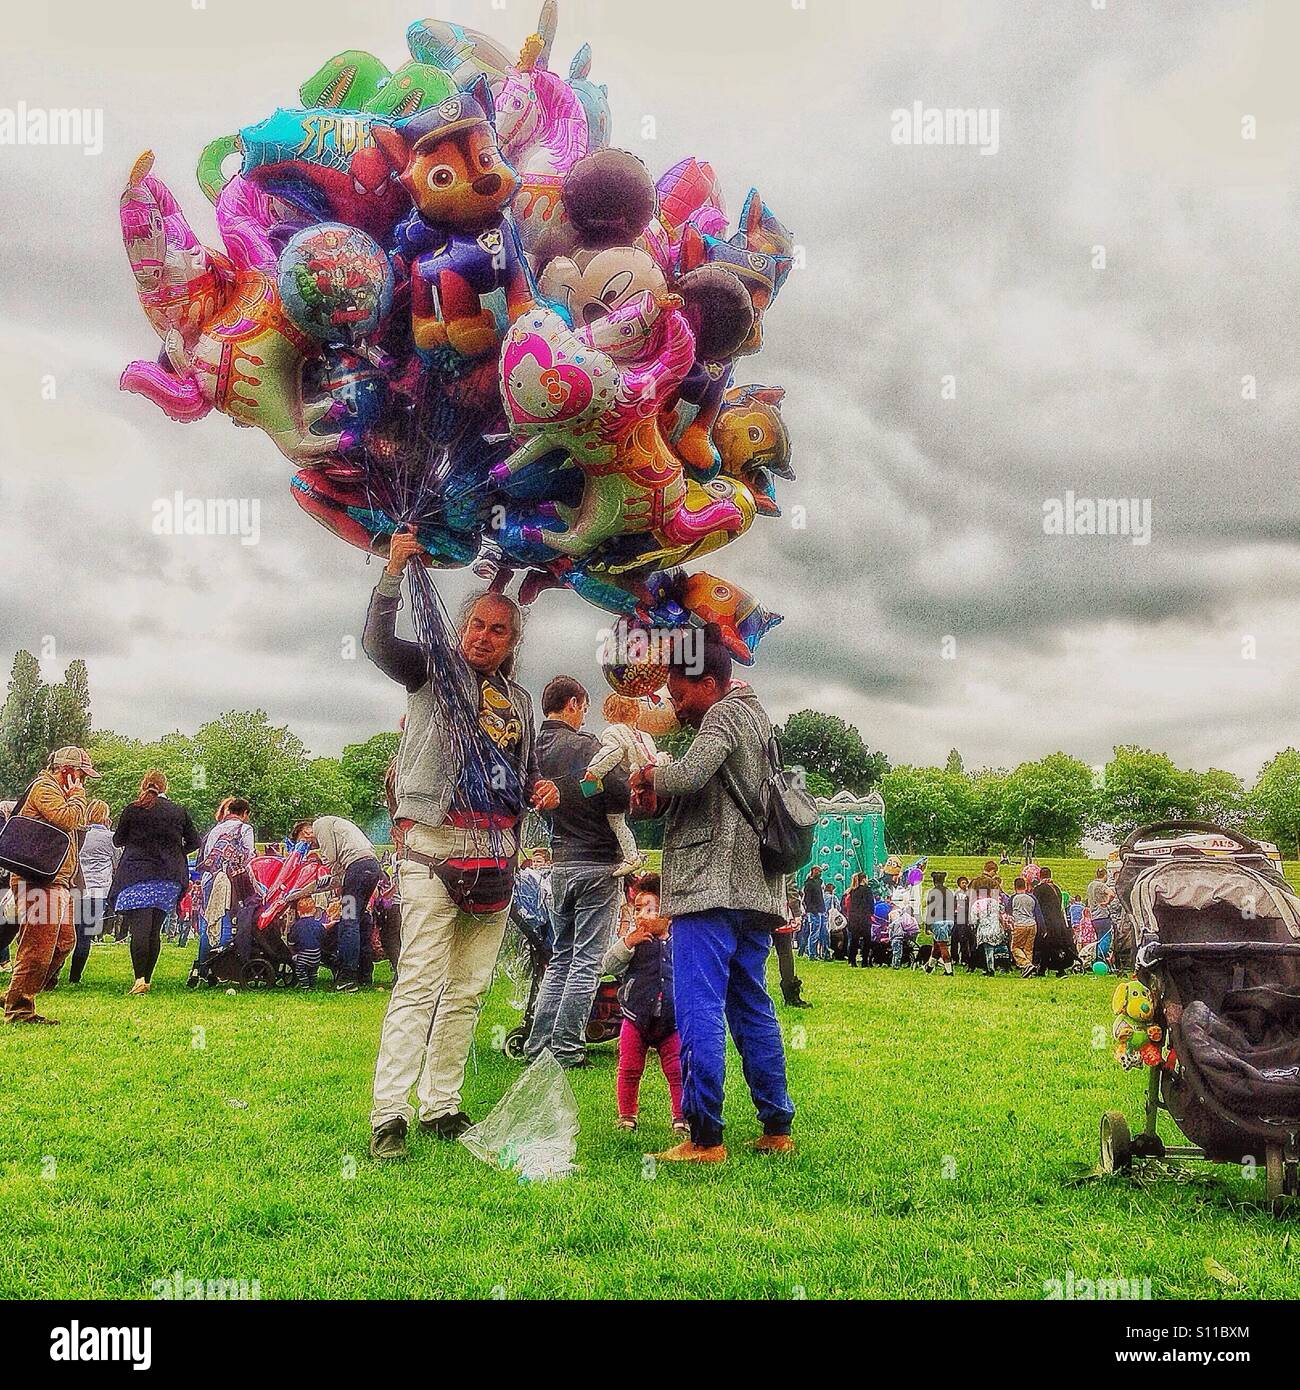 Ballon-Verkäufer auf einer Land-Messe Stockfotografie - Alamy